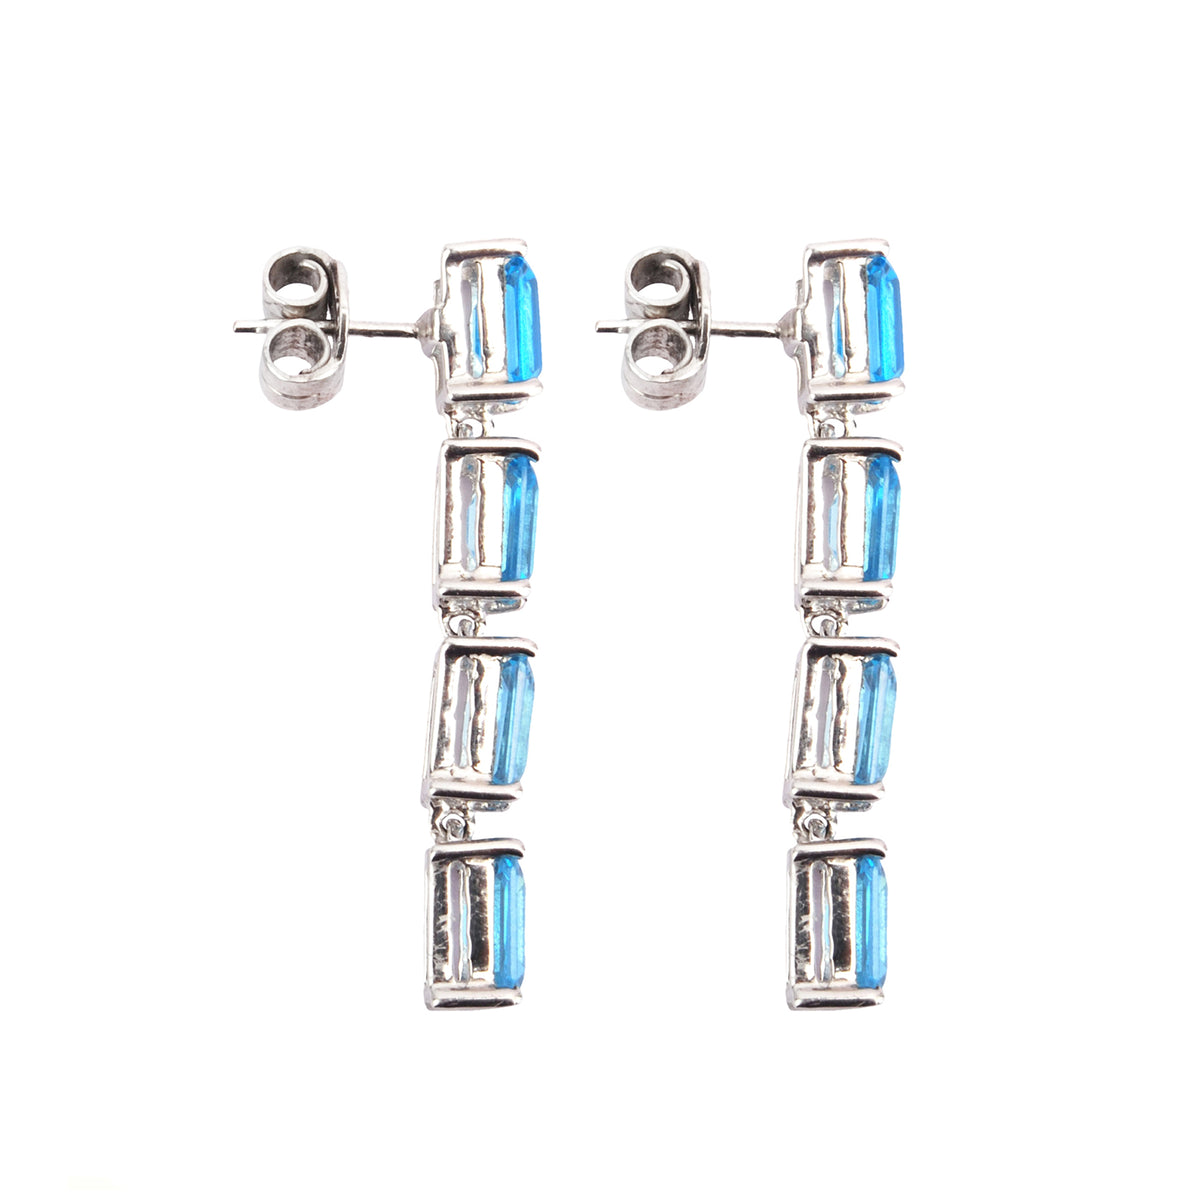 4 equal size emerald cut blue topaz silver earrings